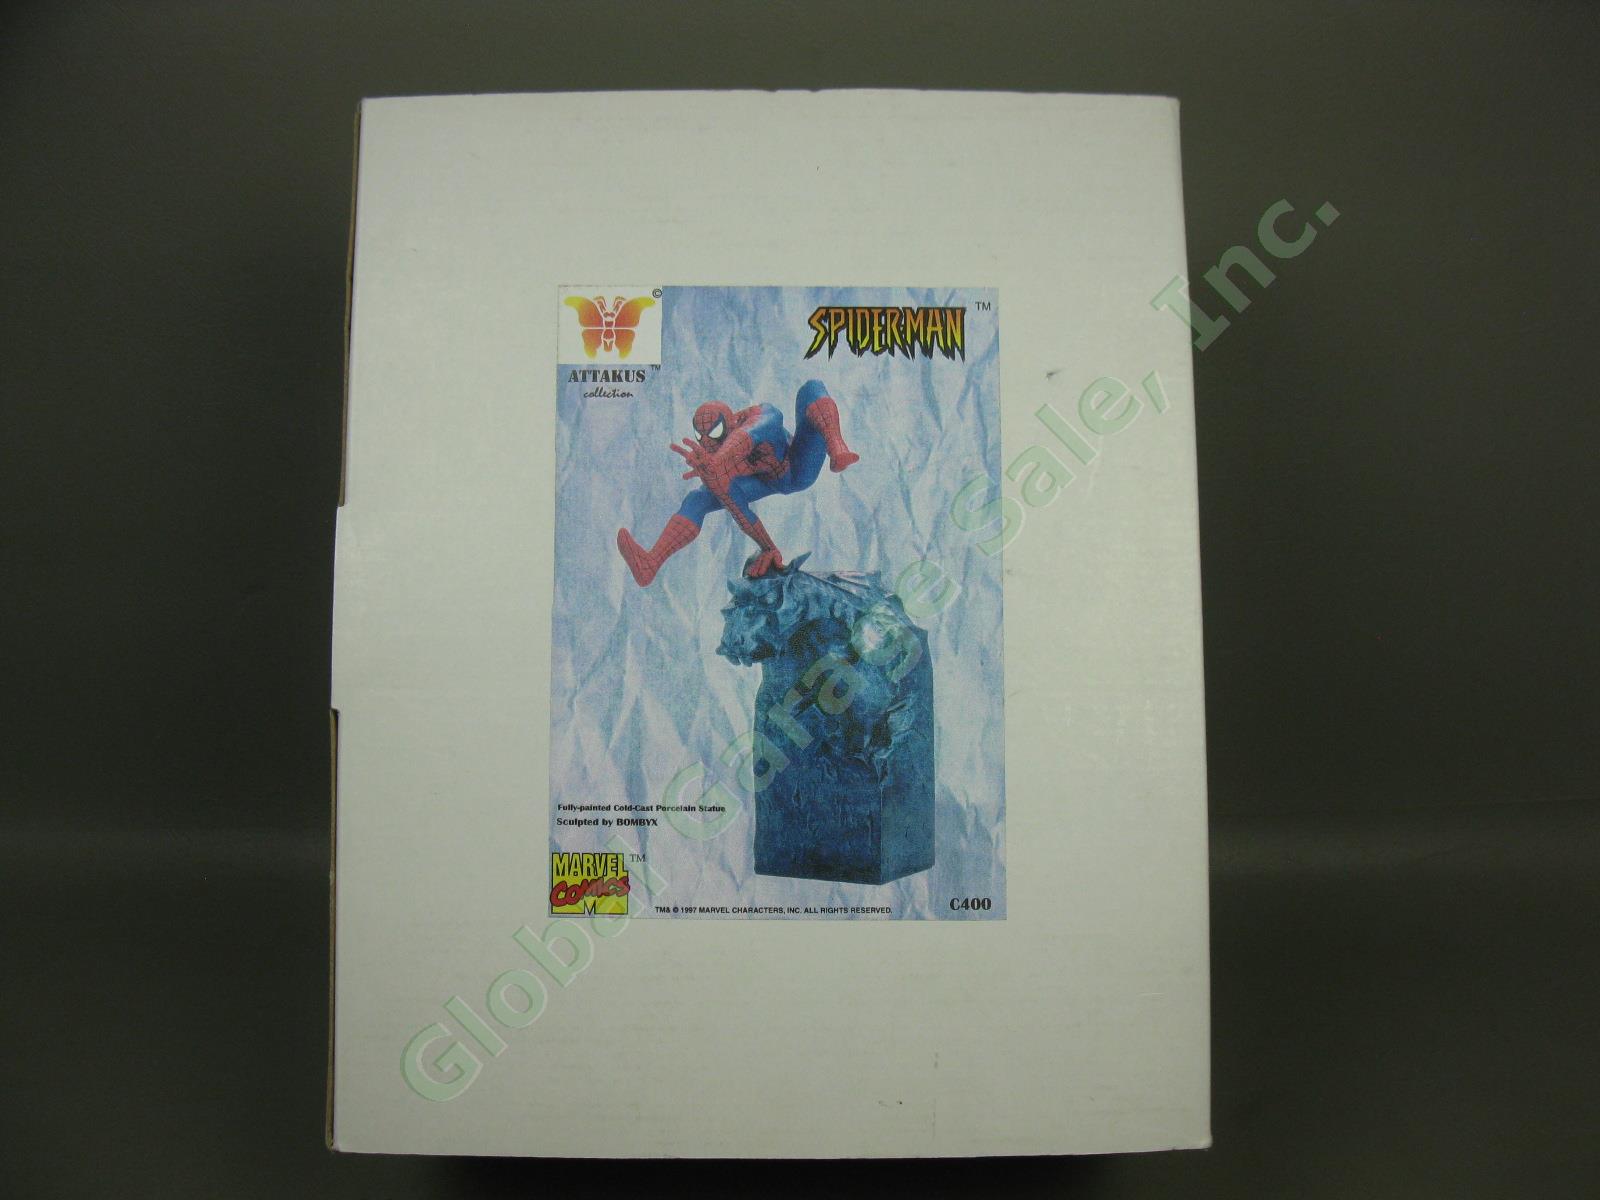 NIB 1997 Attakus Marvel Comics Spiderman Gargoyle Porcelain Statue C400 Bombyx